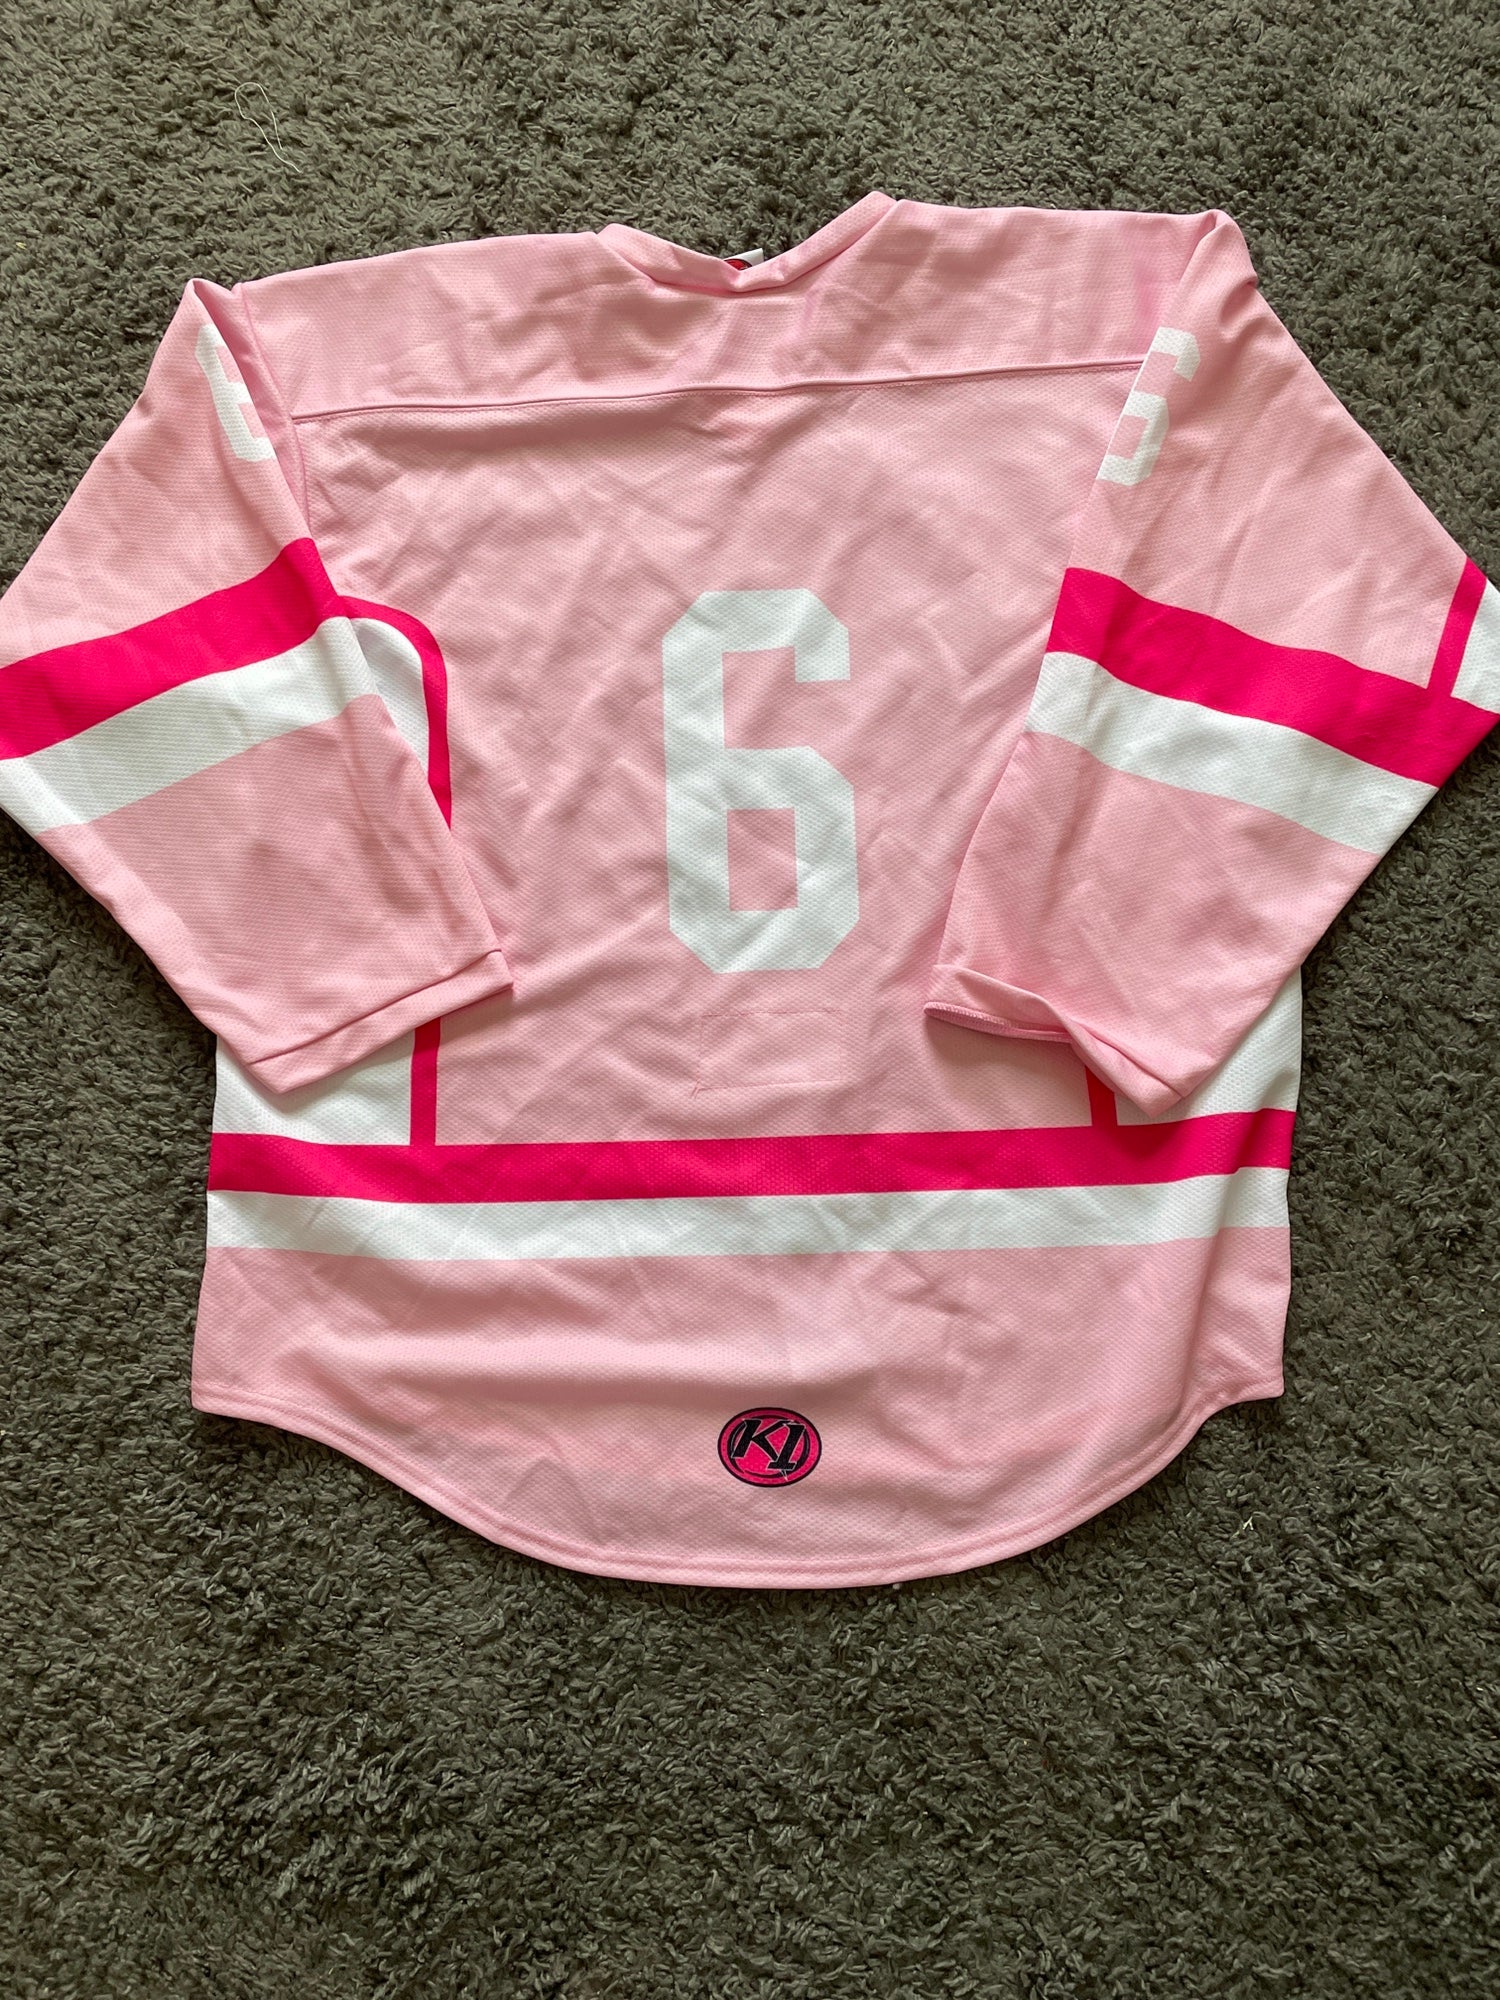 K1 Northeast Generals Breast Cancer Awareness Hockey Jersey